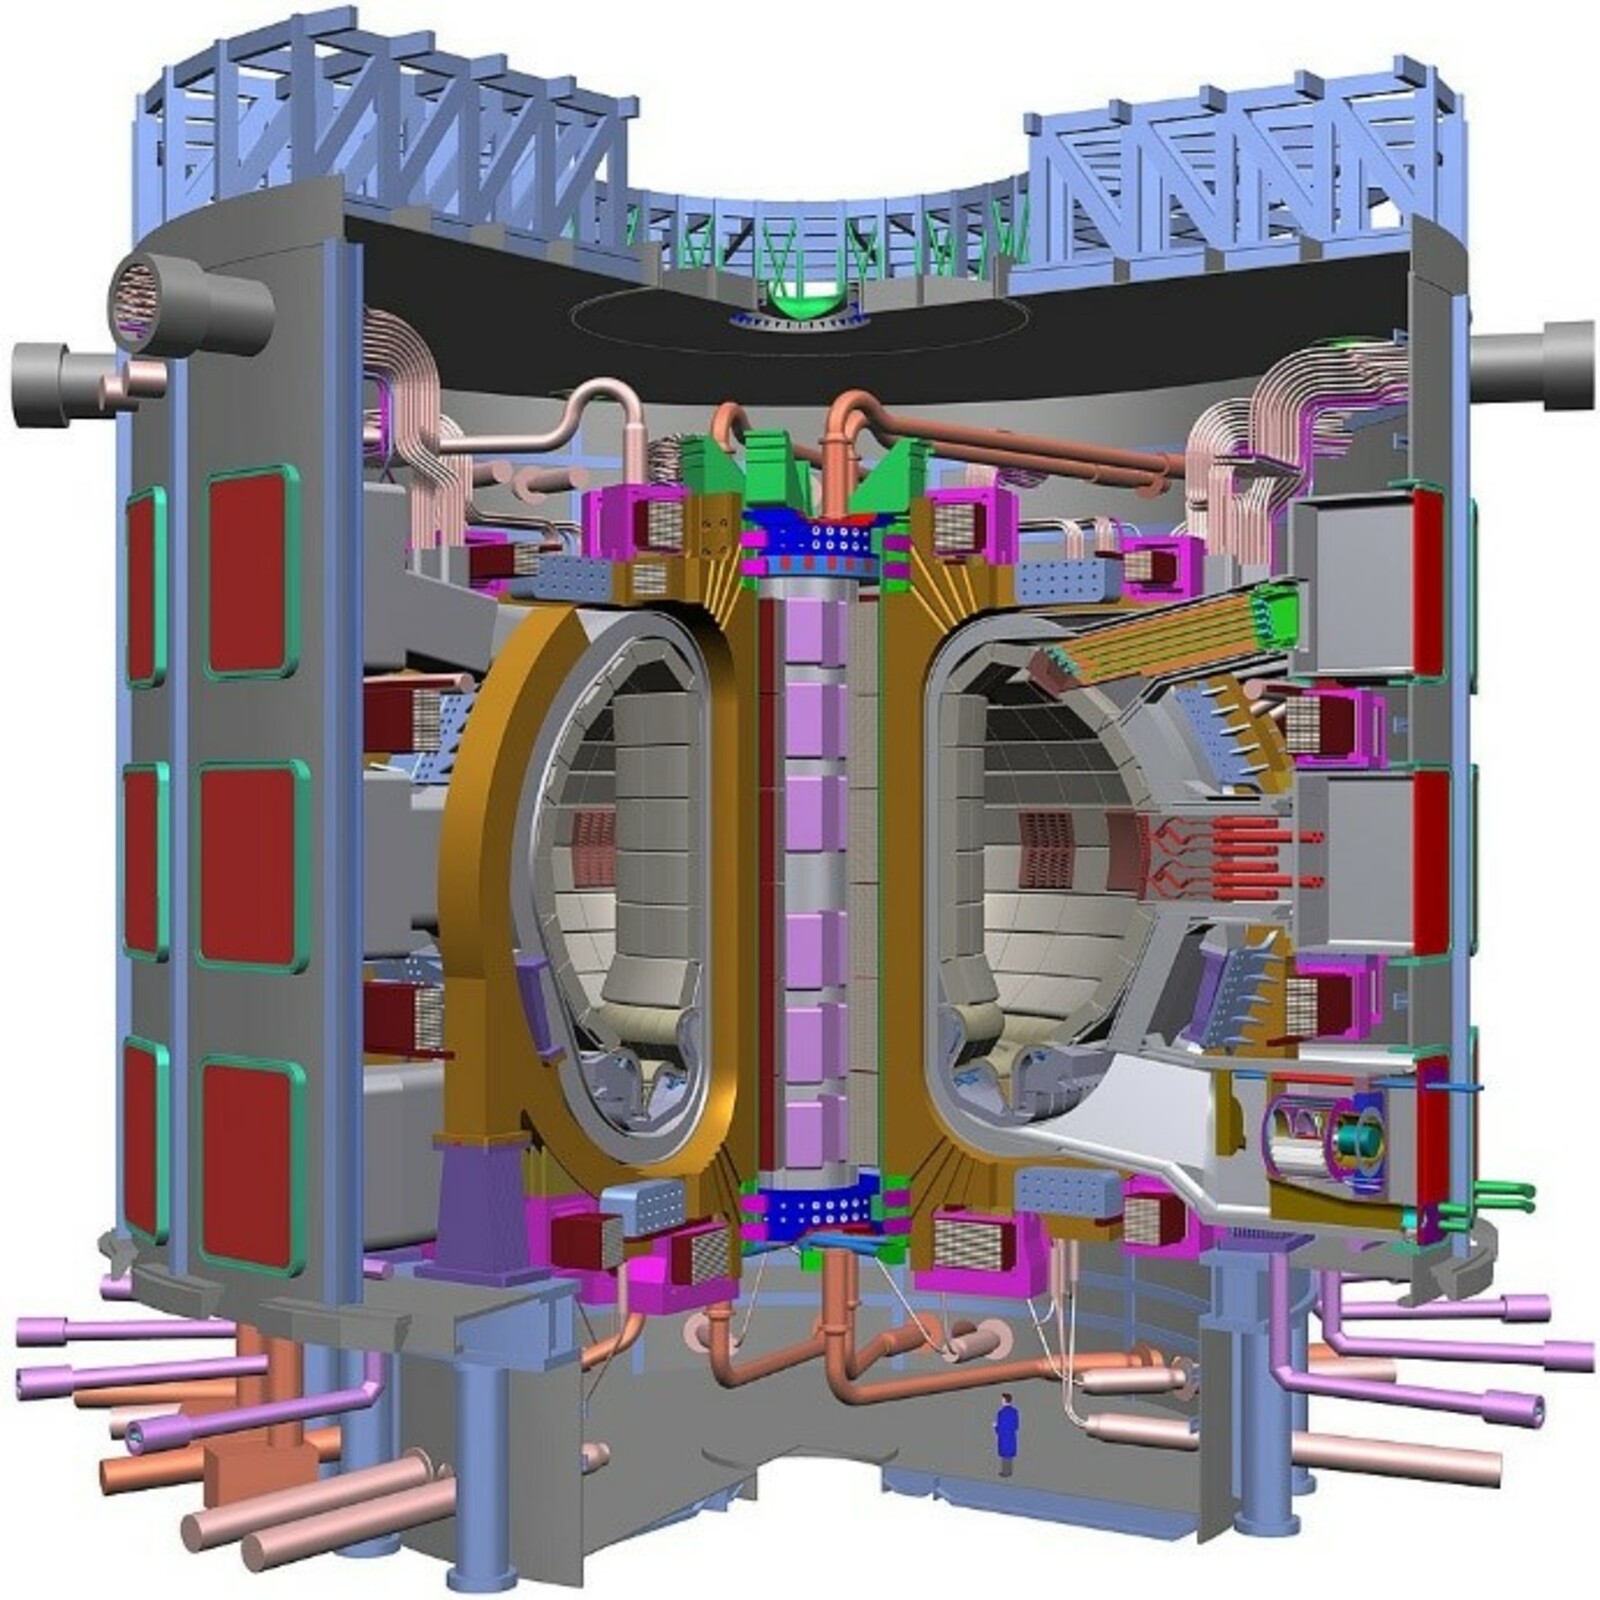 Вид в разрезе первого международного термоядерного реактора ITER